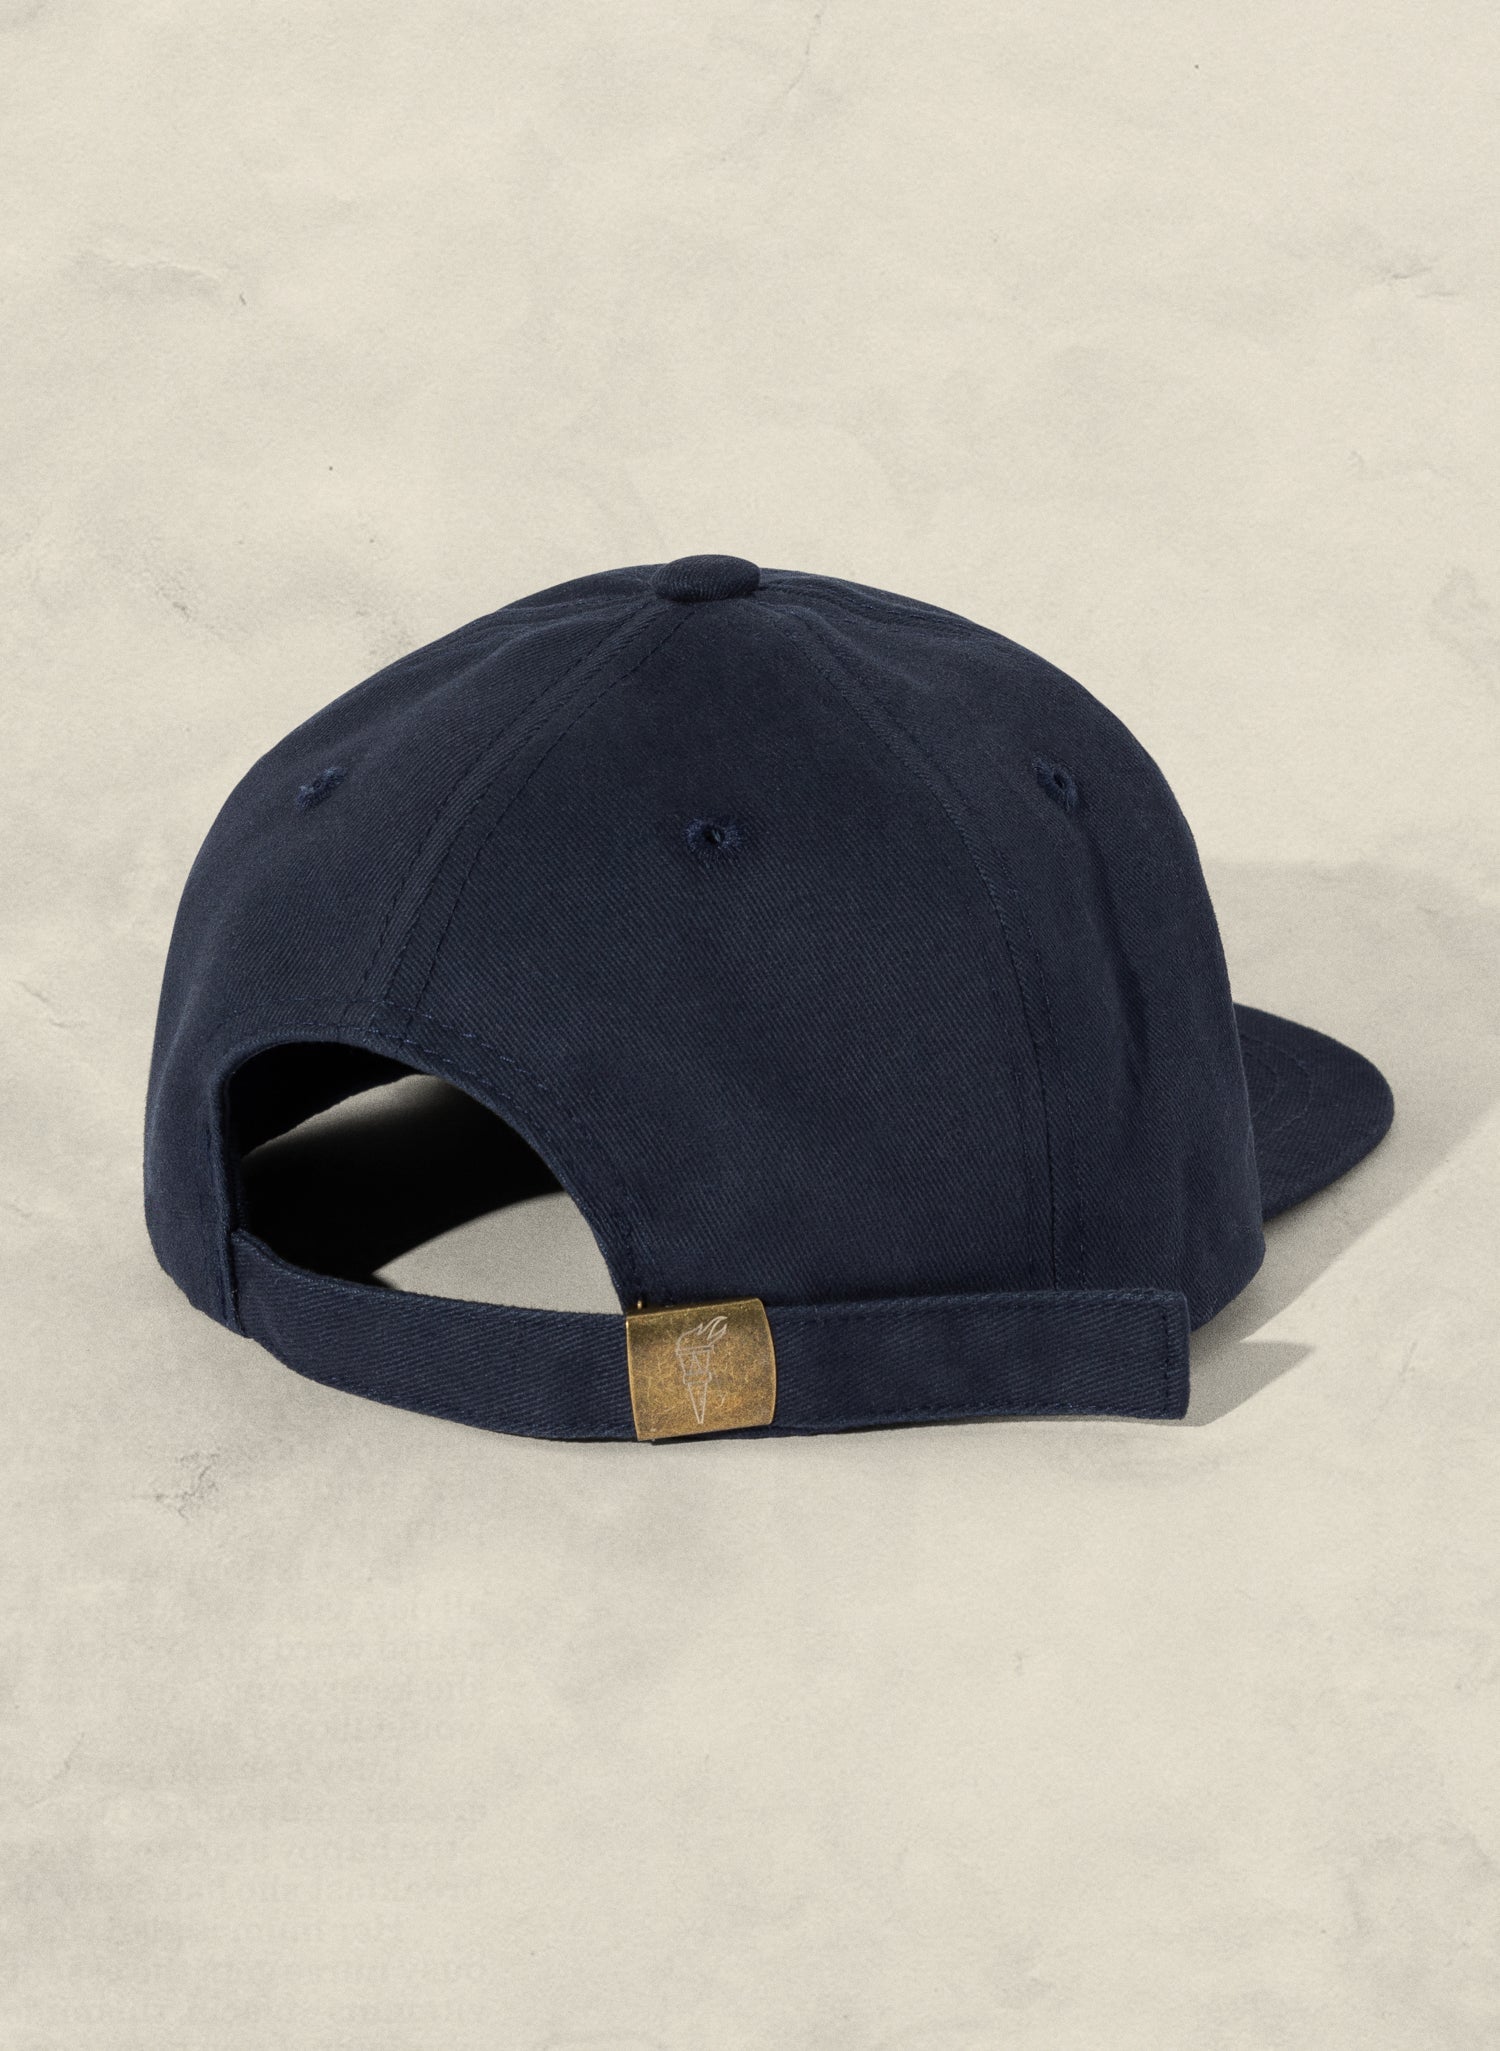 Weld Mfg Brushed Cotton Twill Kids Unstructured 6 Panel Vintage Inspired Baseball Strapback Hat - Laid Back Childrens Headwear - Navy